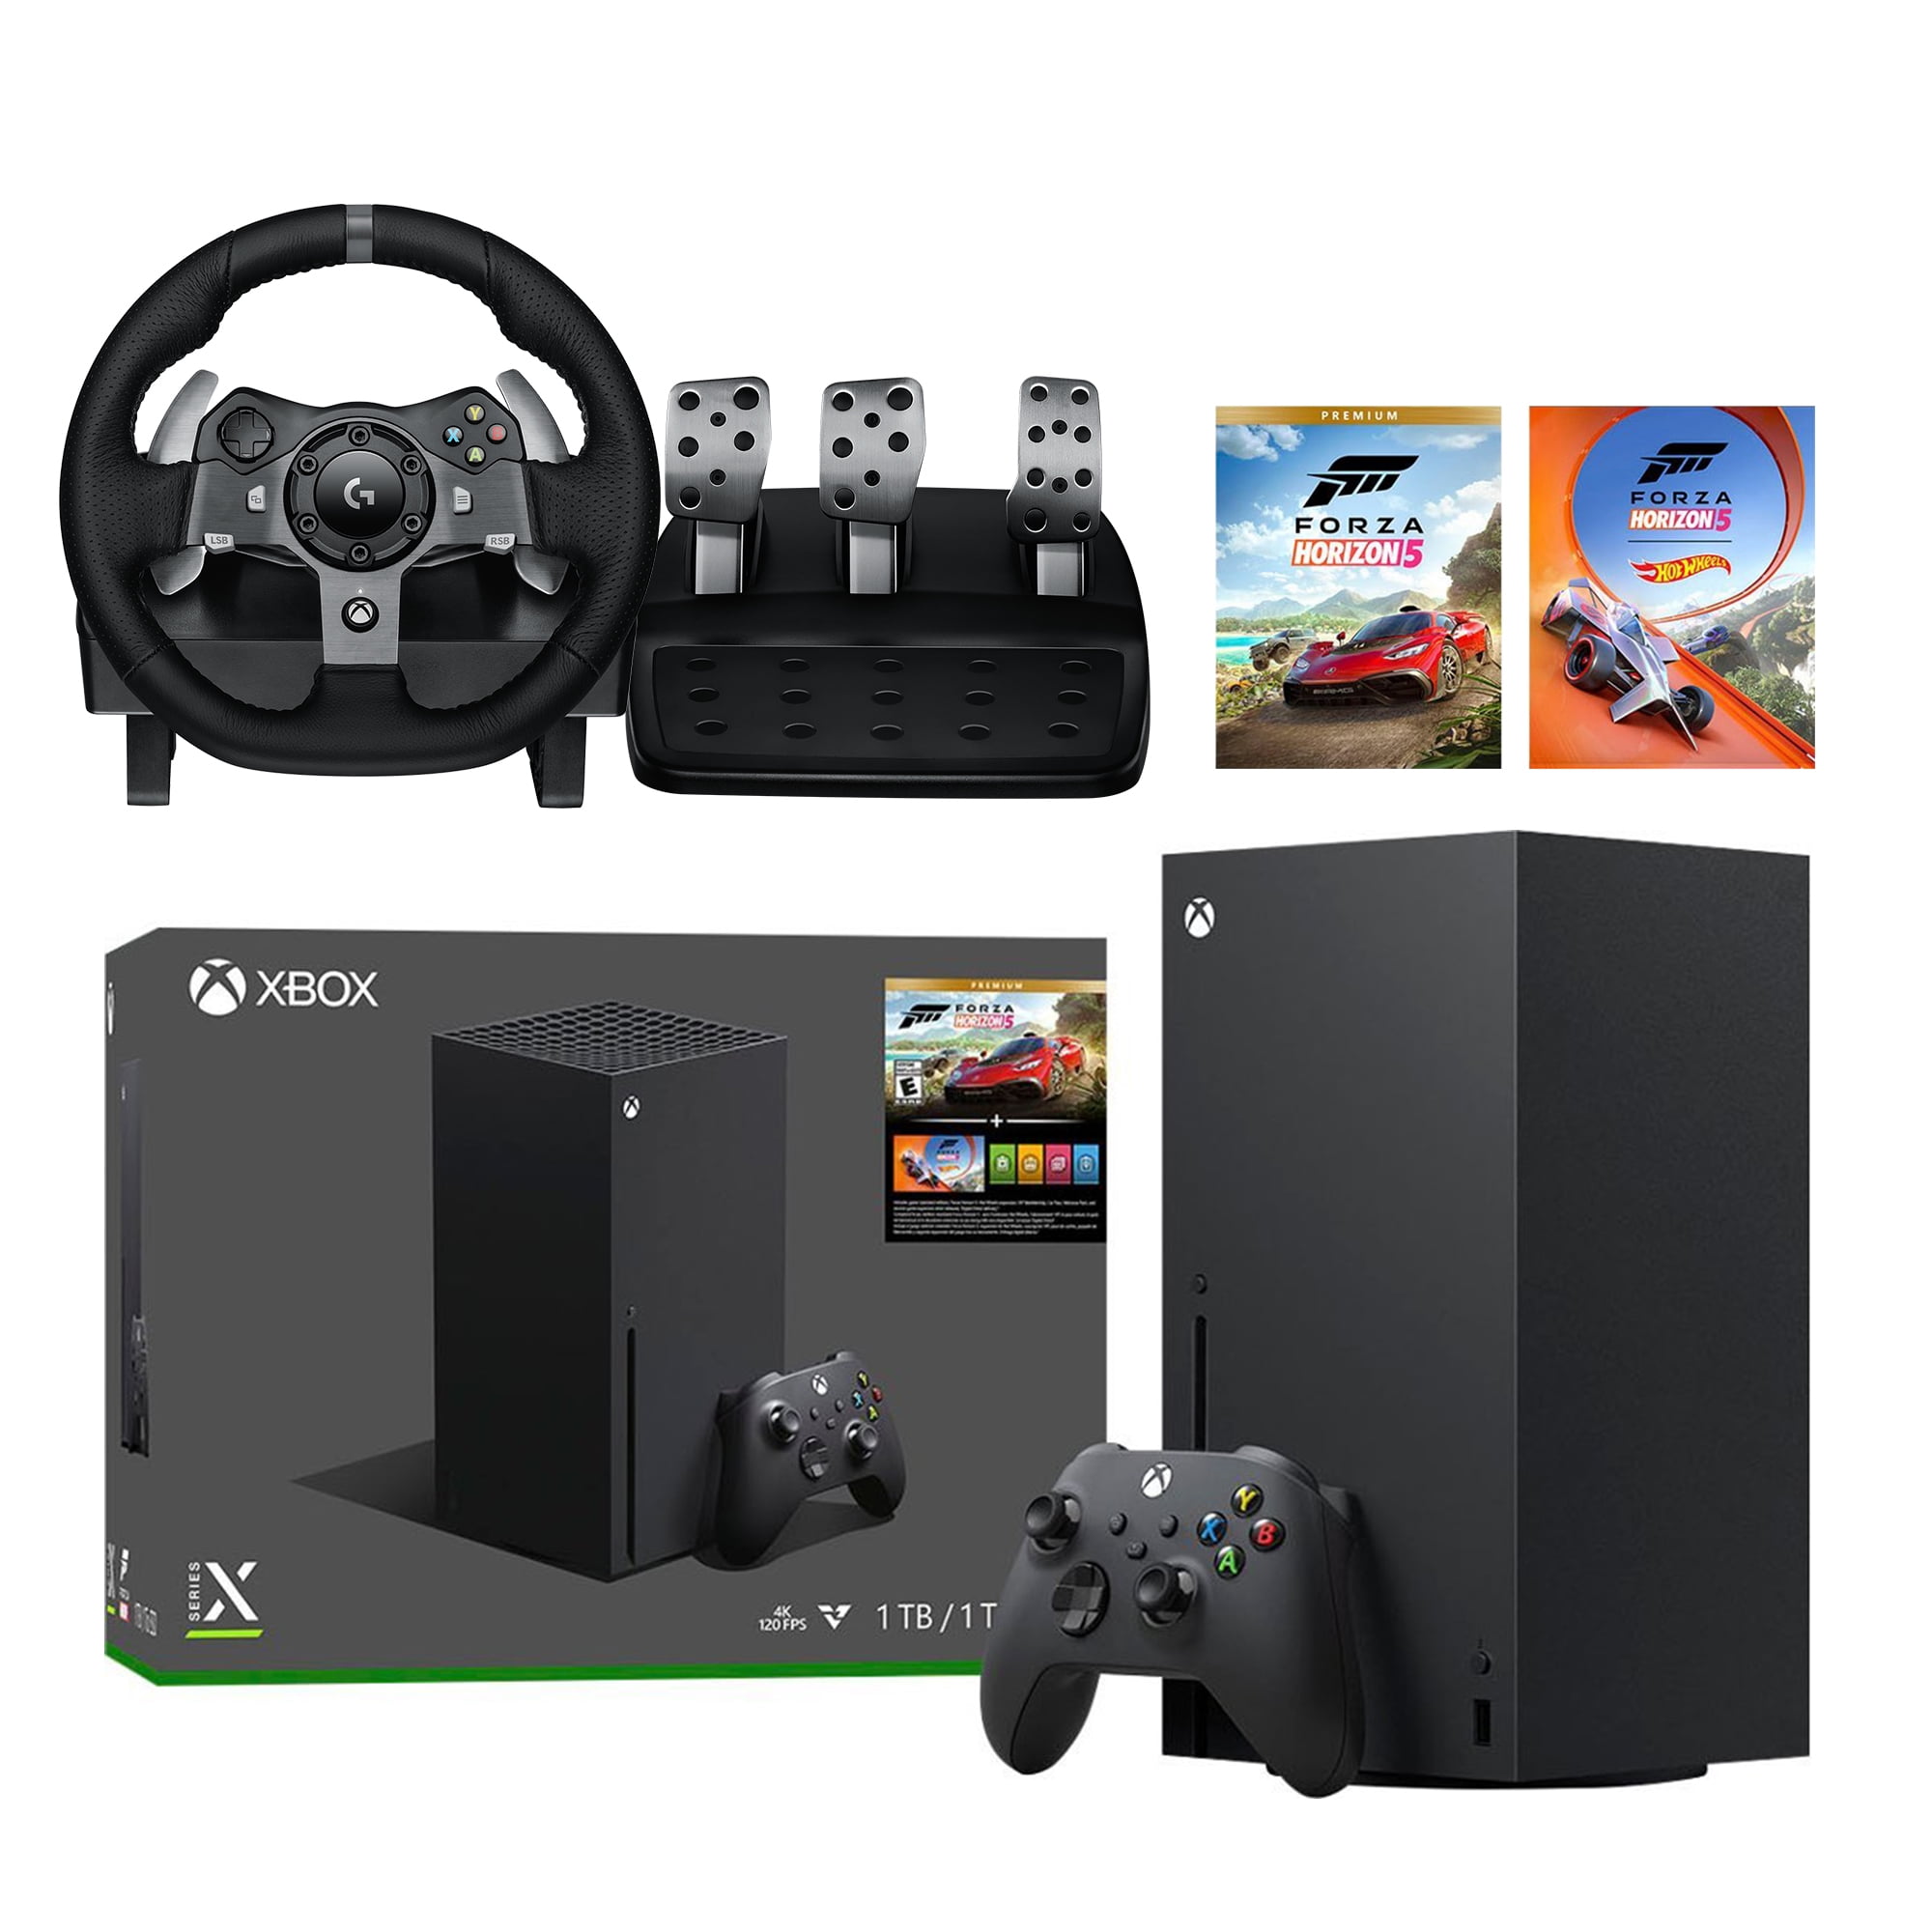 Buy Forza Horizon 5 and Forza Horizon 4 Premium Editions Bundle - Microsoft  Store en-PG